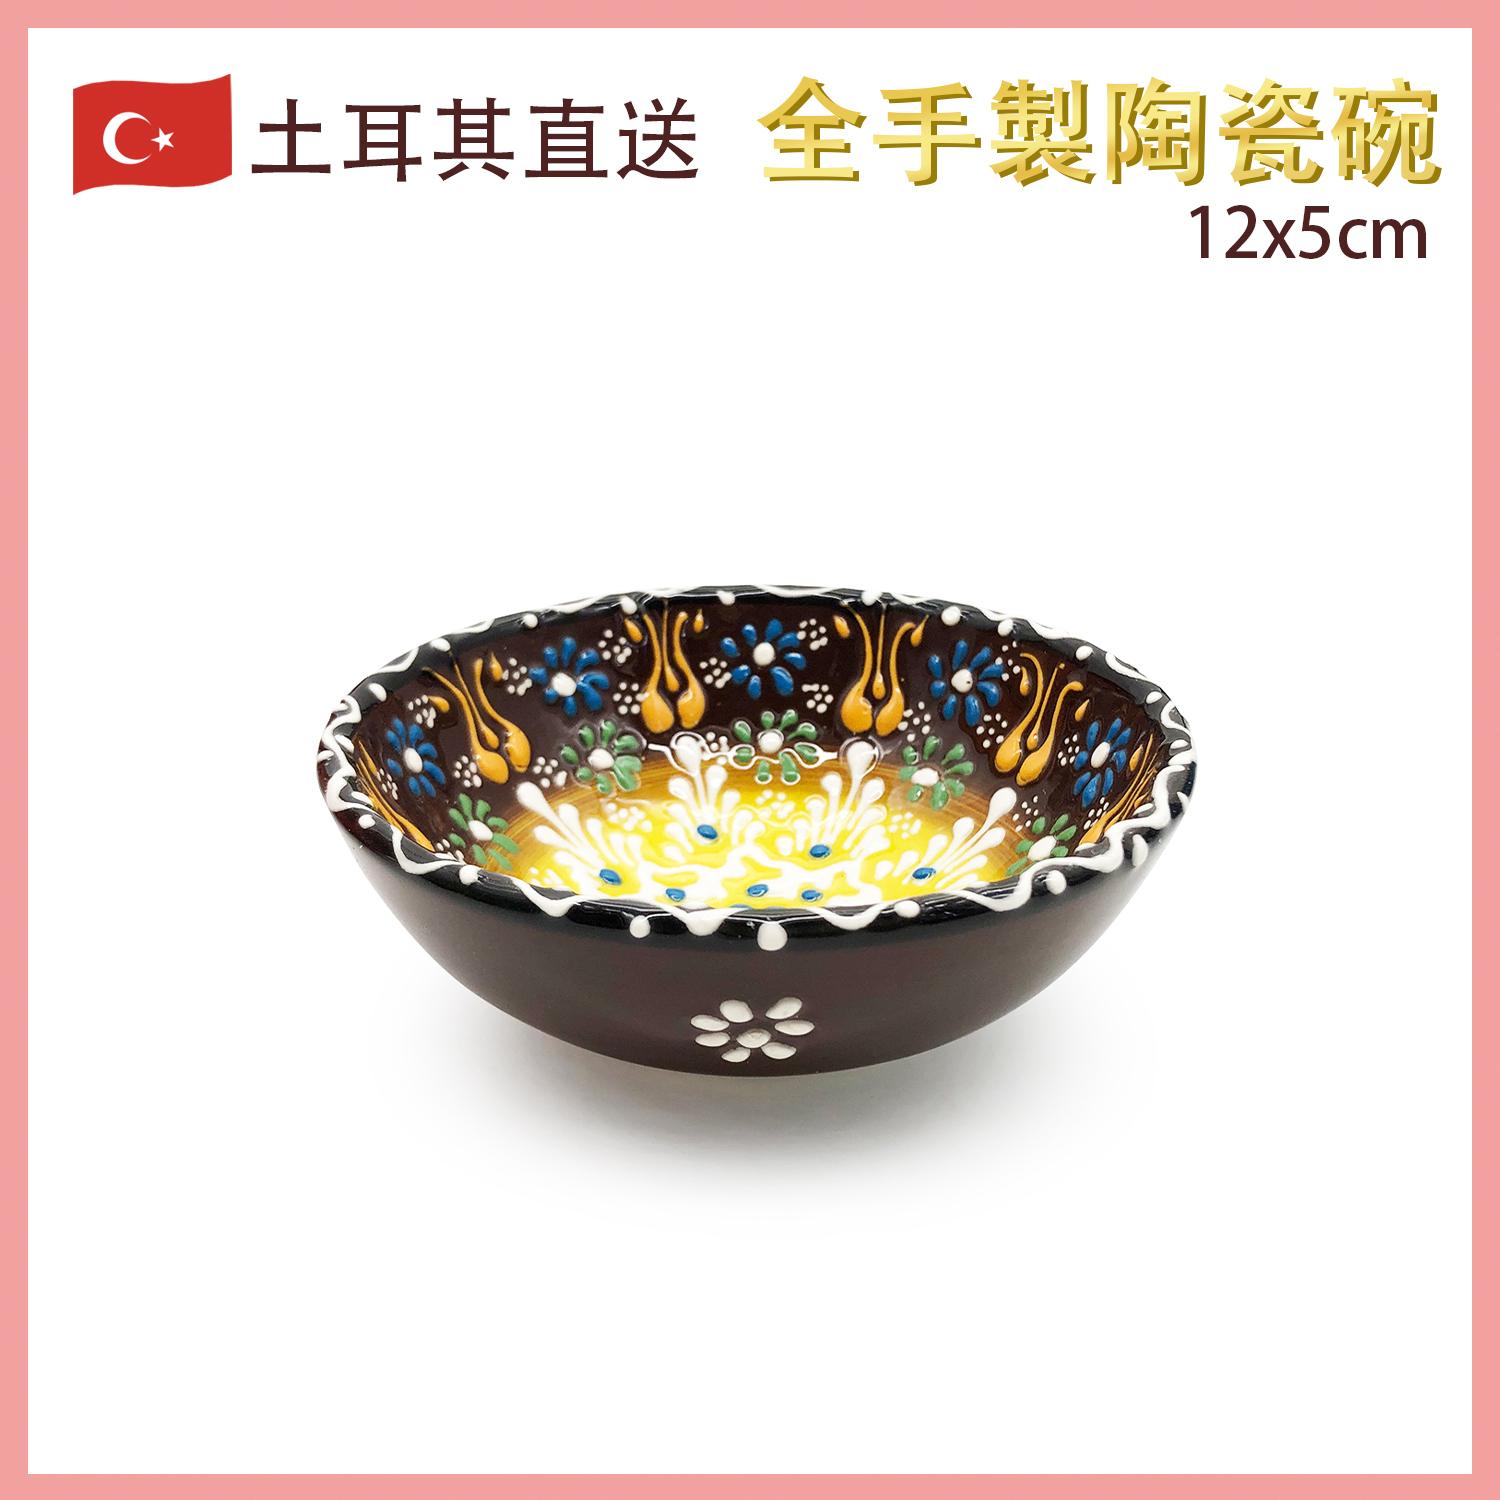 120MM手繪土耳其傳統工藝陶瓷碗， 土耳其餐具奧斯曼帝國浮雕圖案土耳其藝術時尚潮物(VTR-CERAMIC-BOWL-120MM-30106)